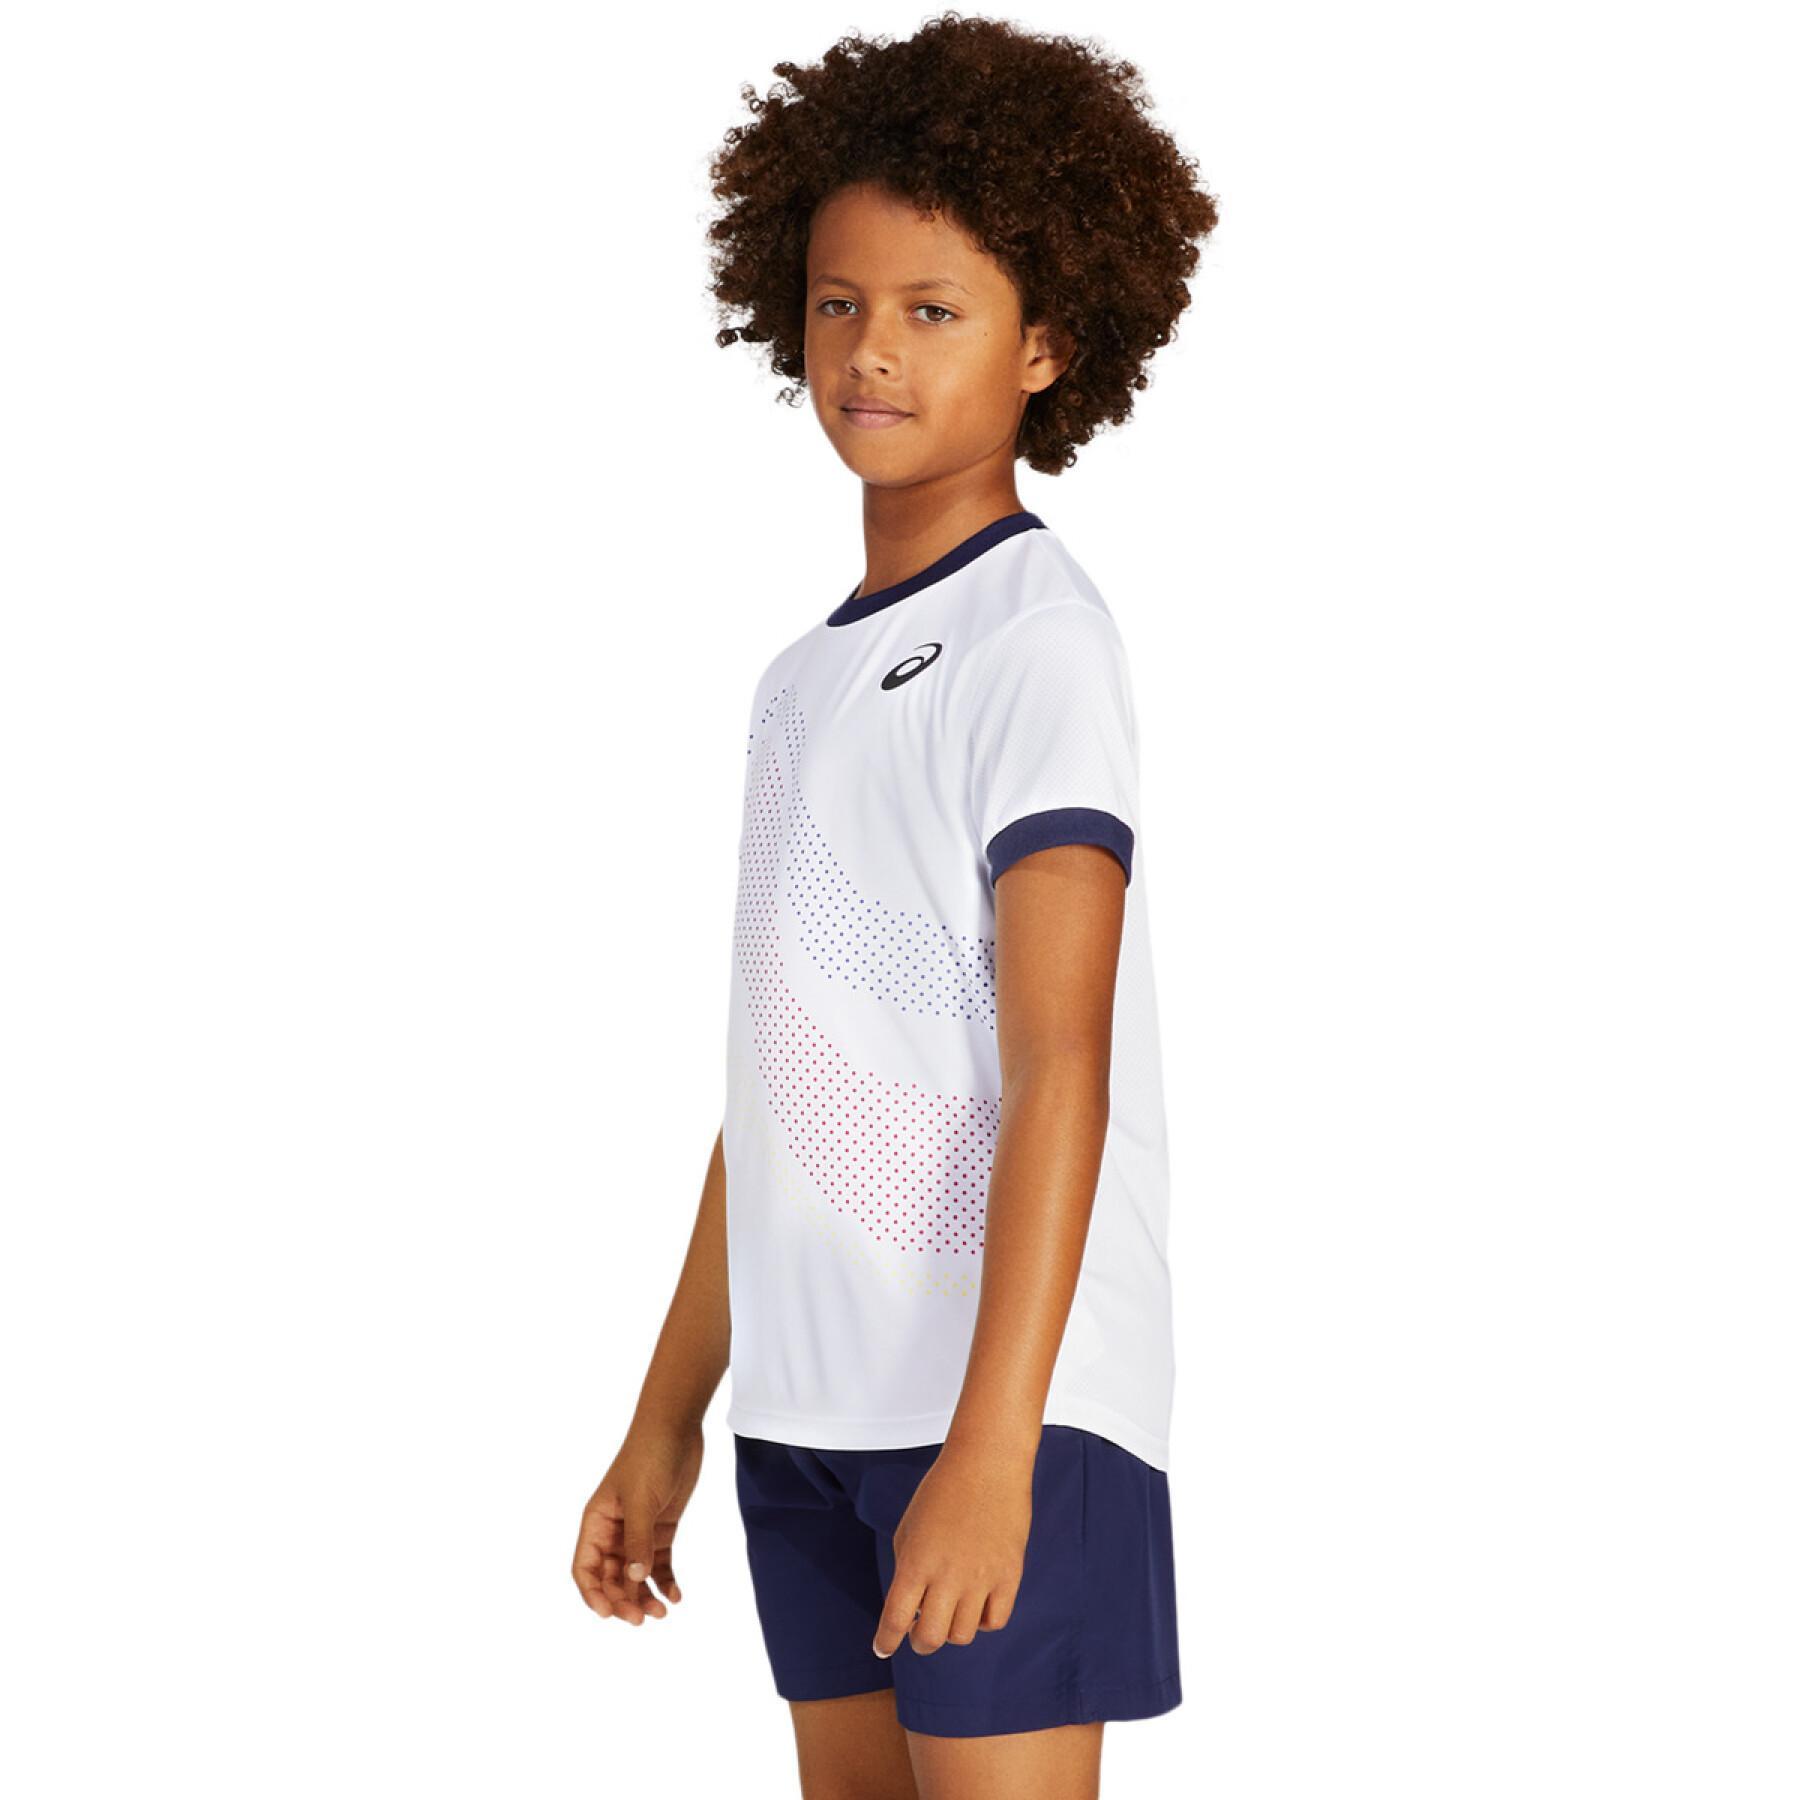 Camiseta niño Asics Tennis B Gpx